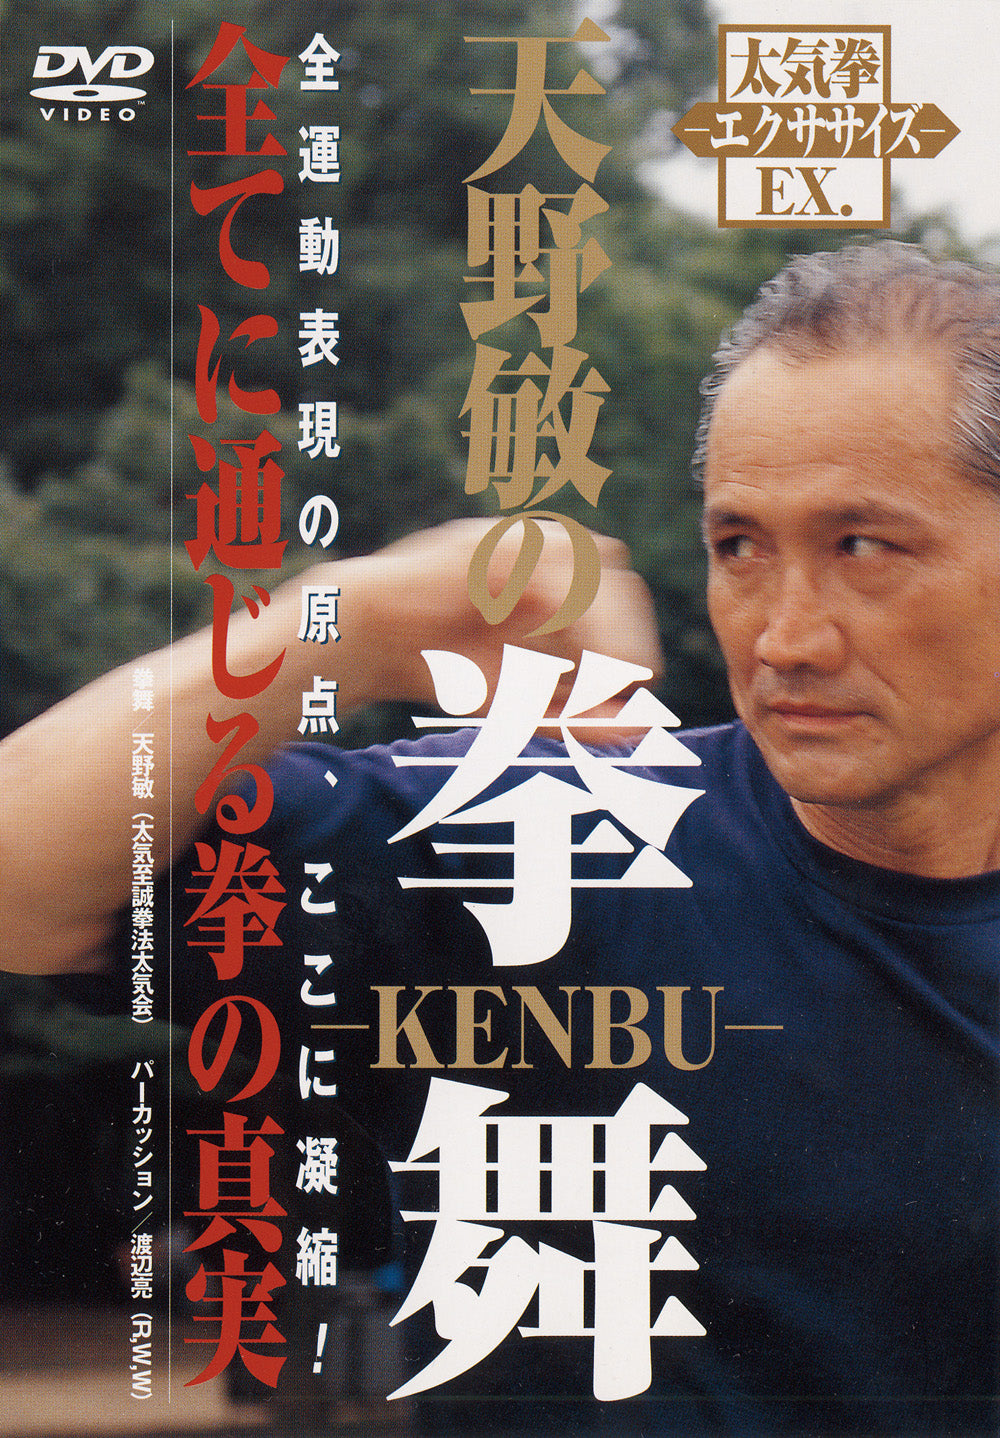 Taikiken Kenbu DVD by Satoshi Amano